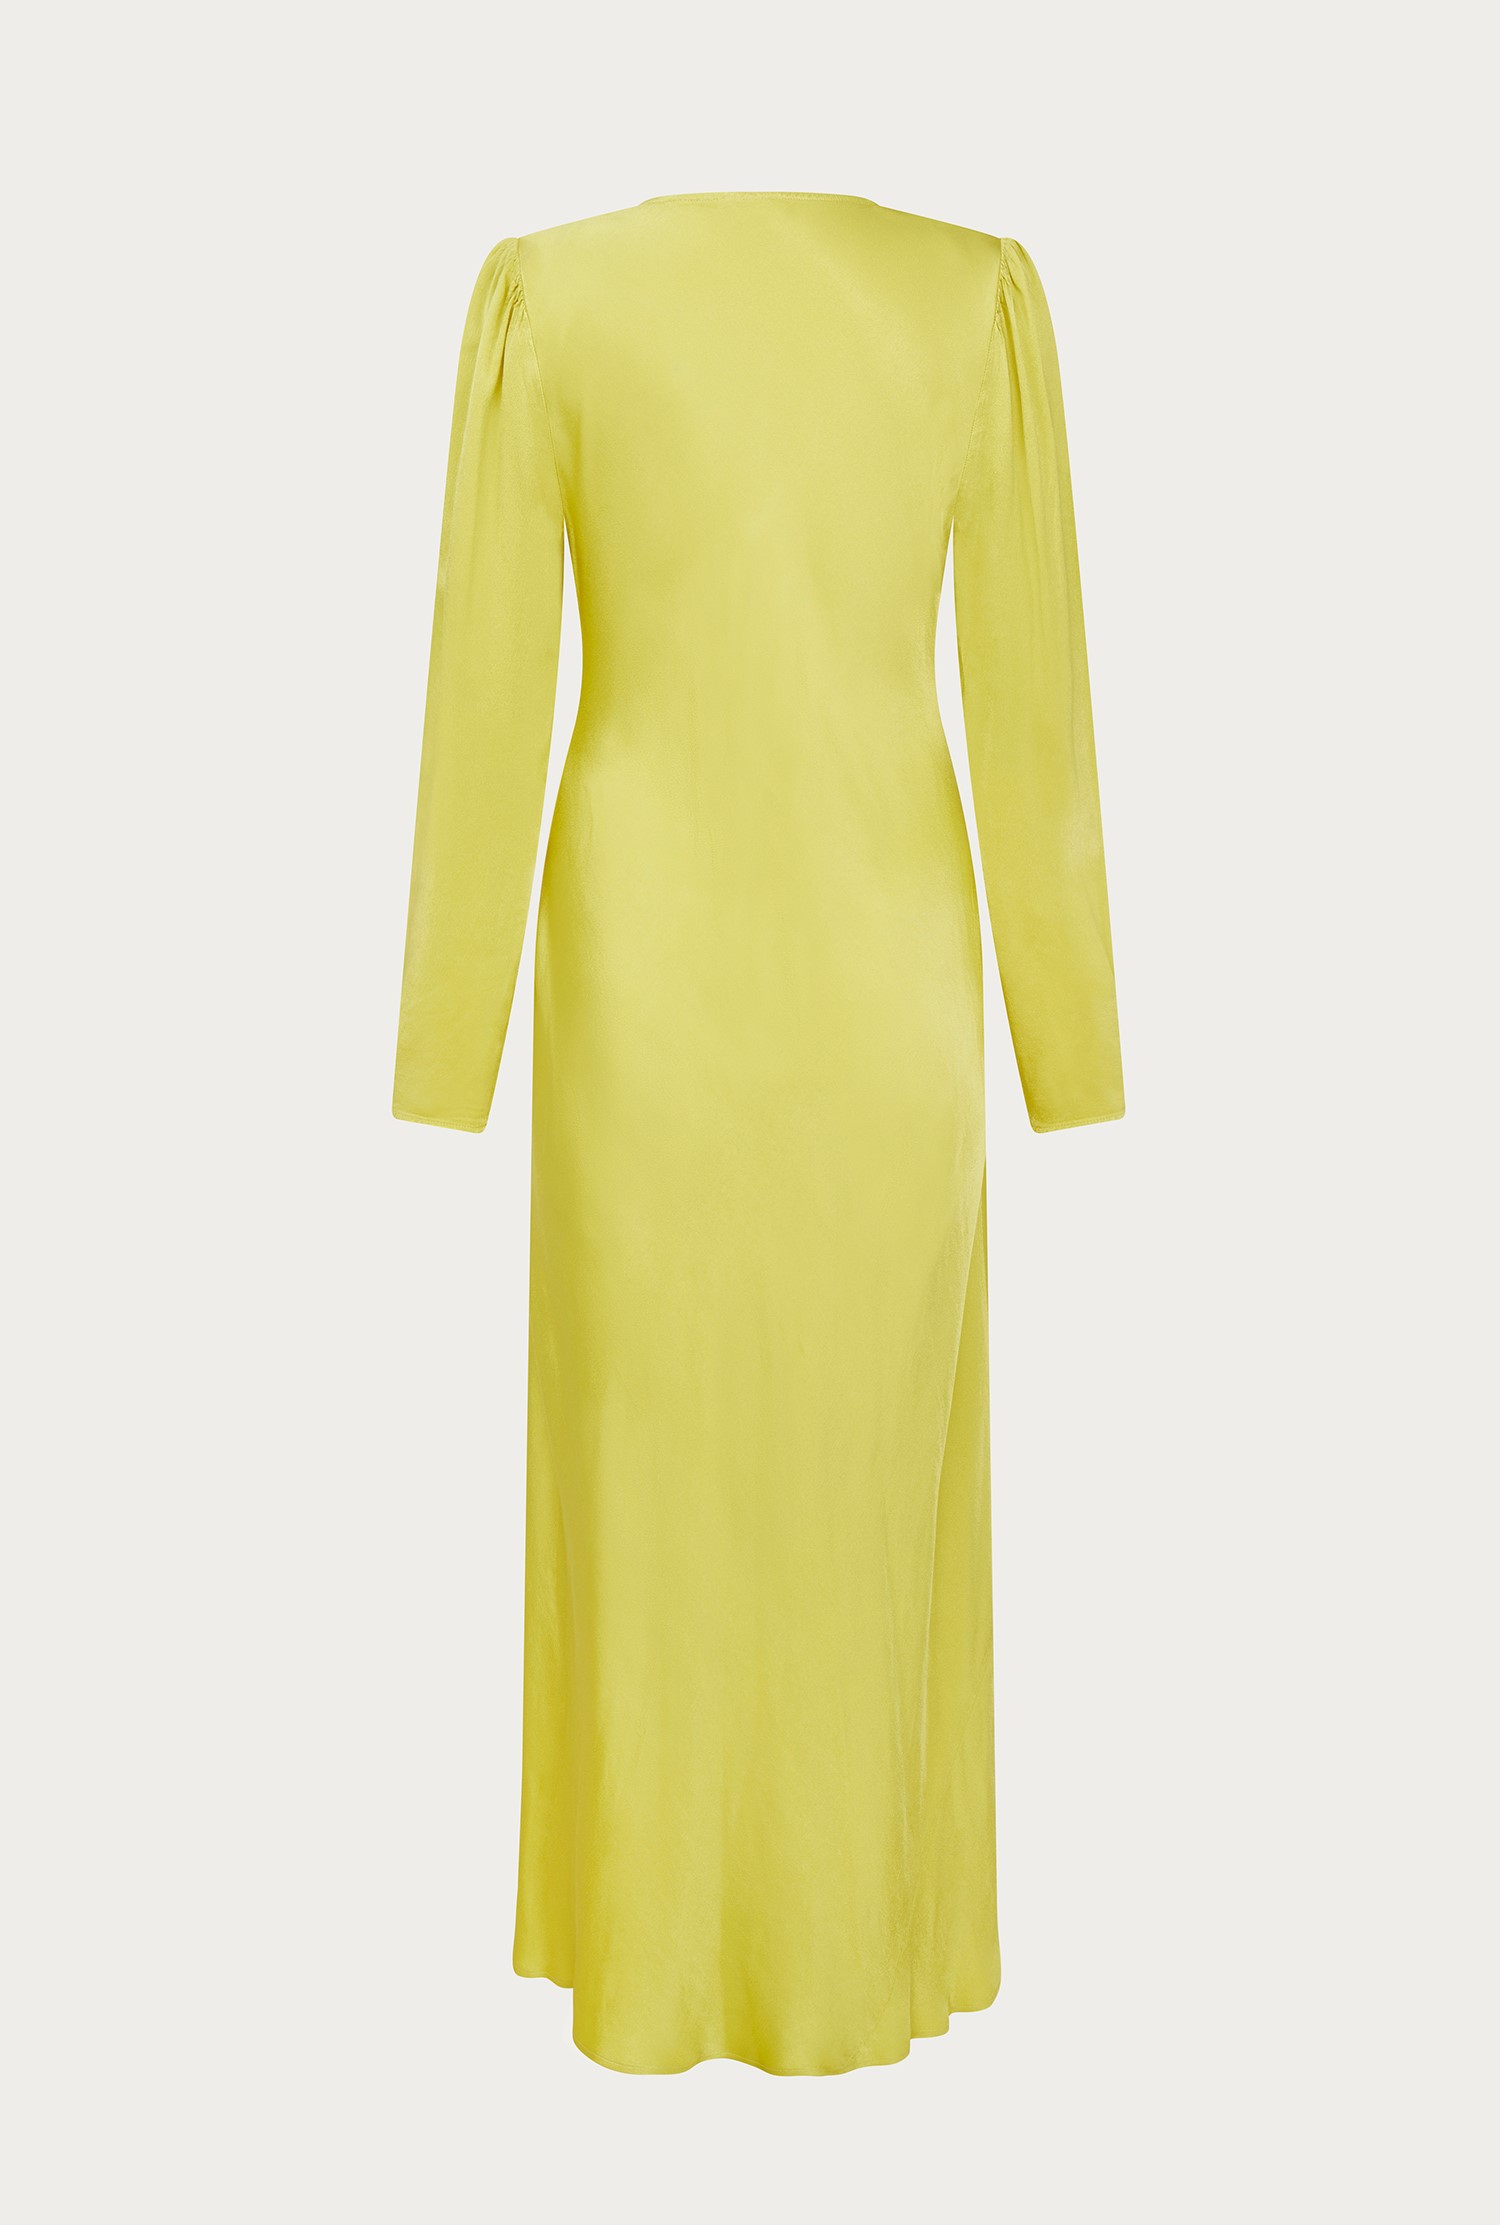 Hallie Lime Green Satin Midi Dress | Ghost London